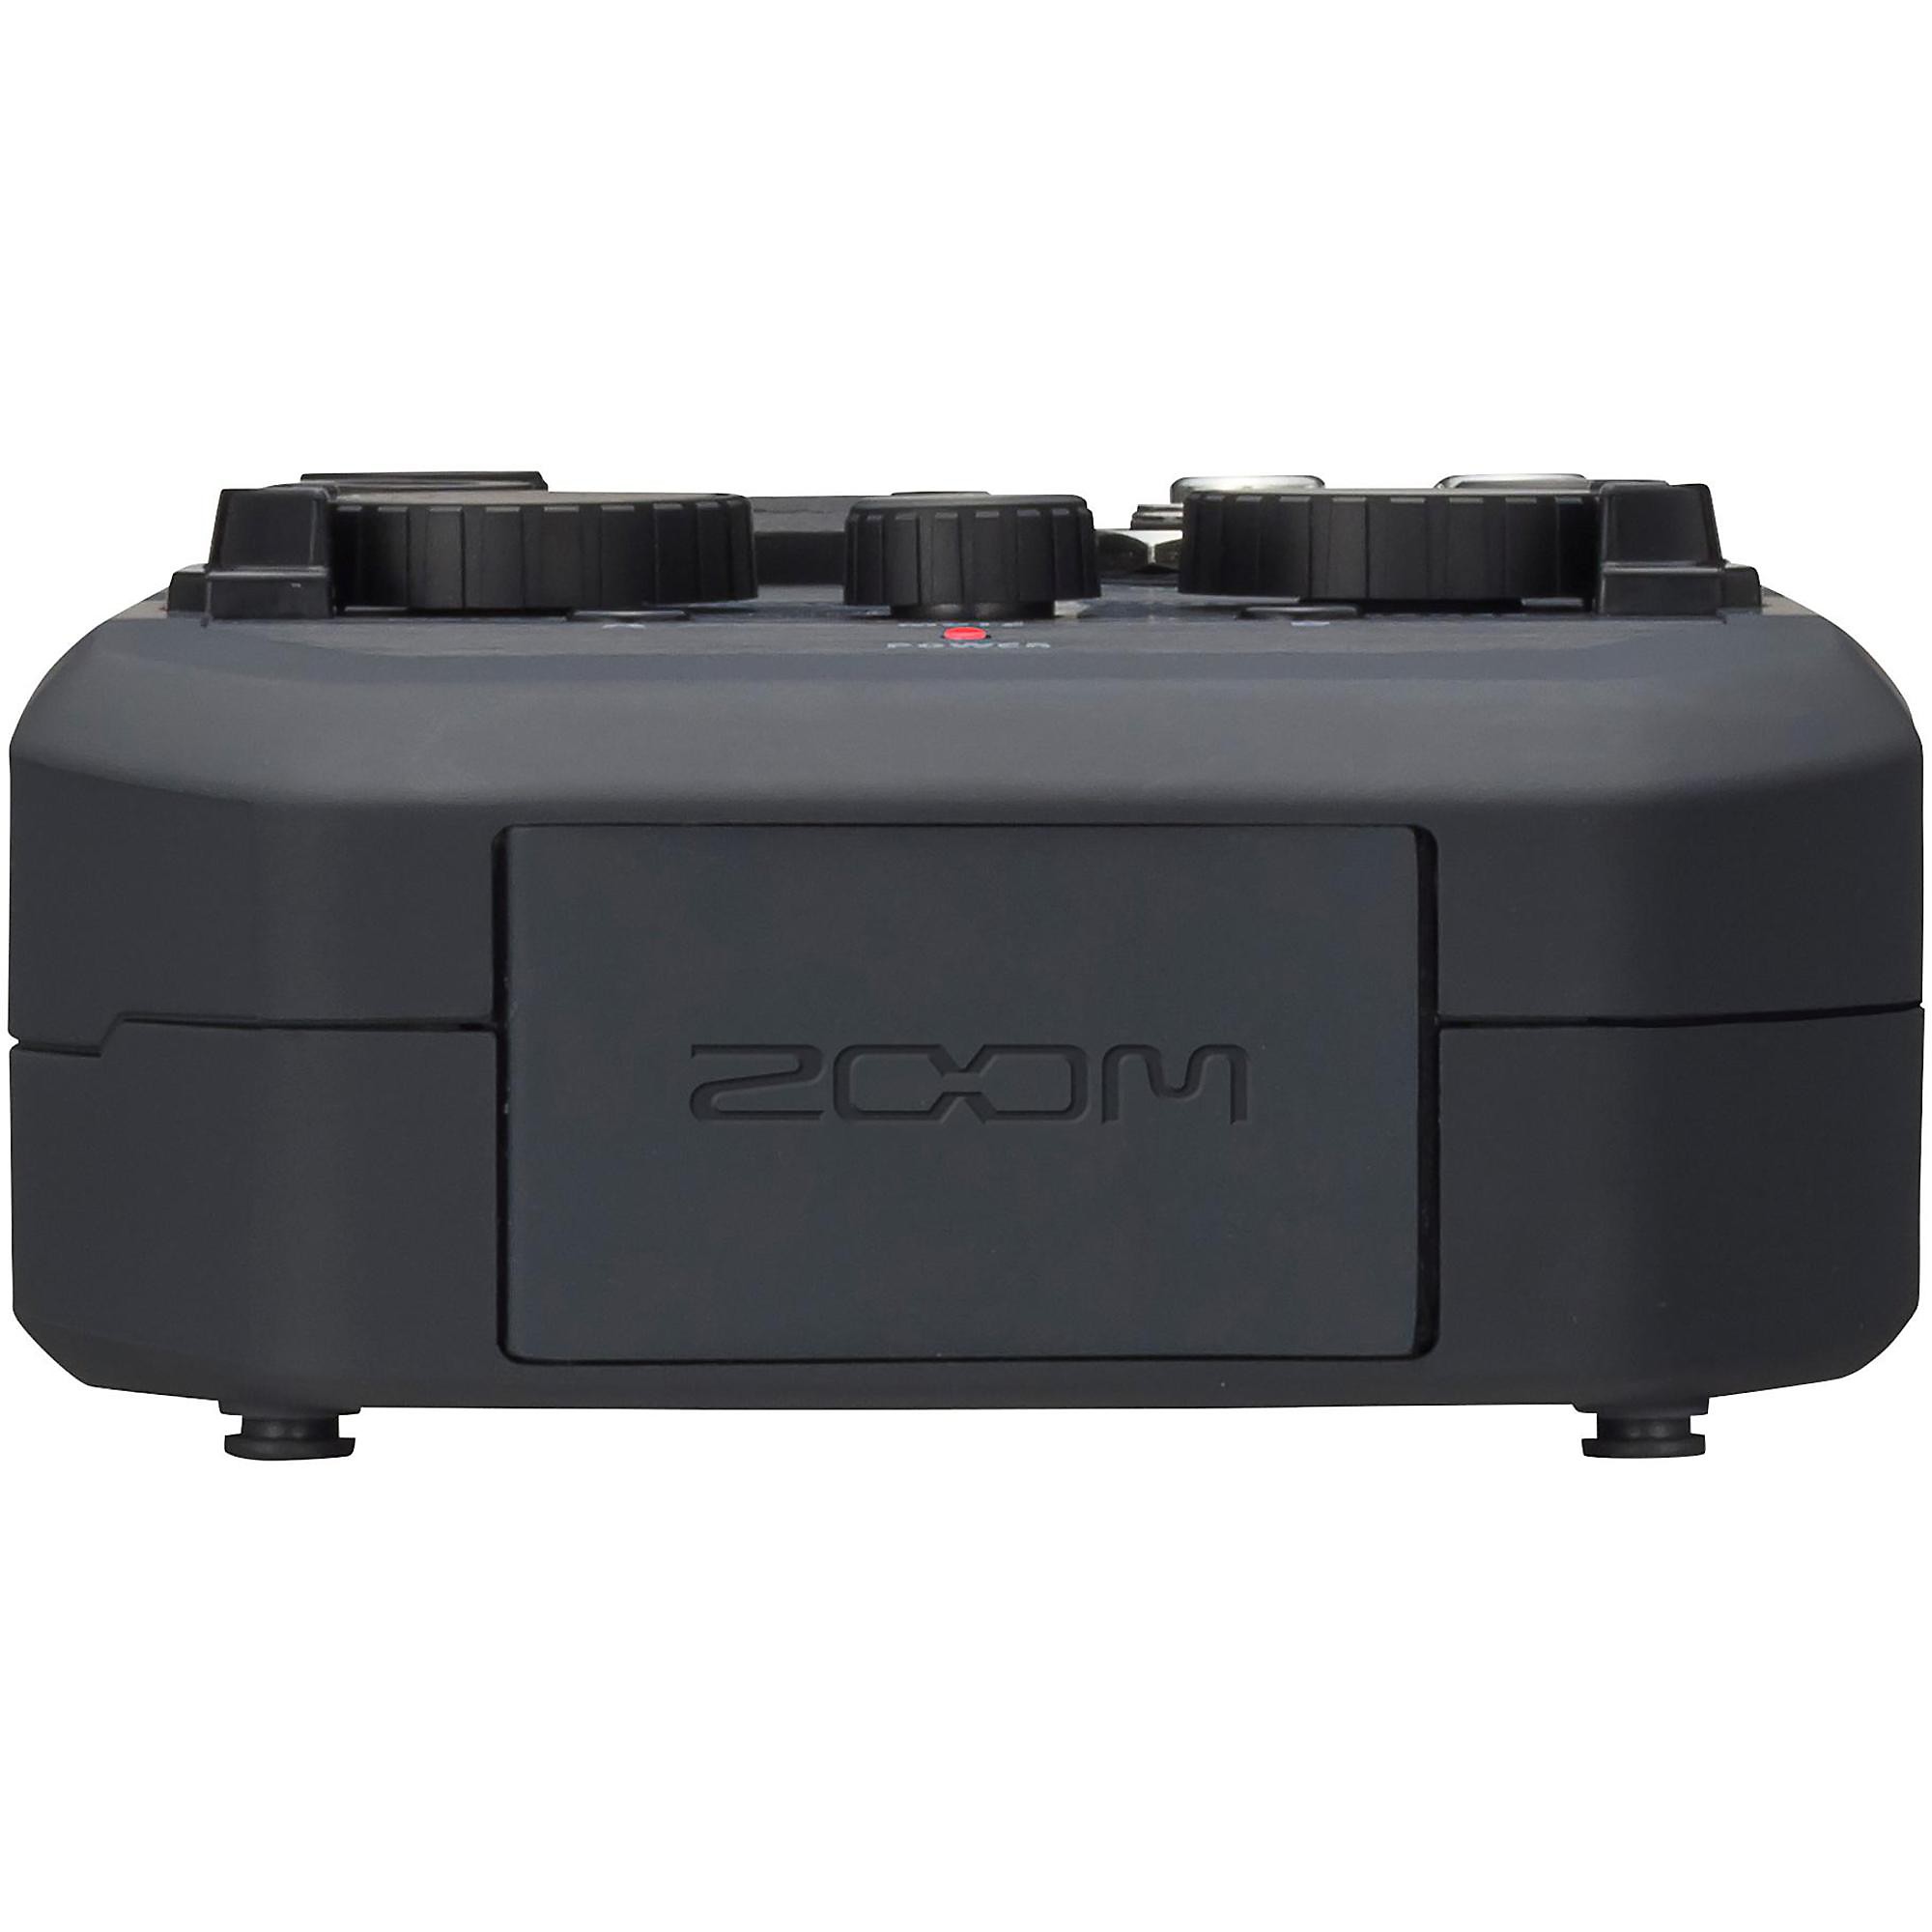 Zoom U-24 Handy Audio Interface | Guitar Center